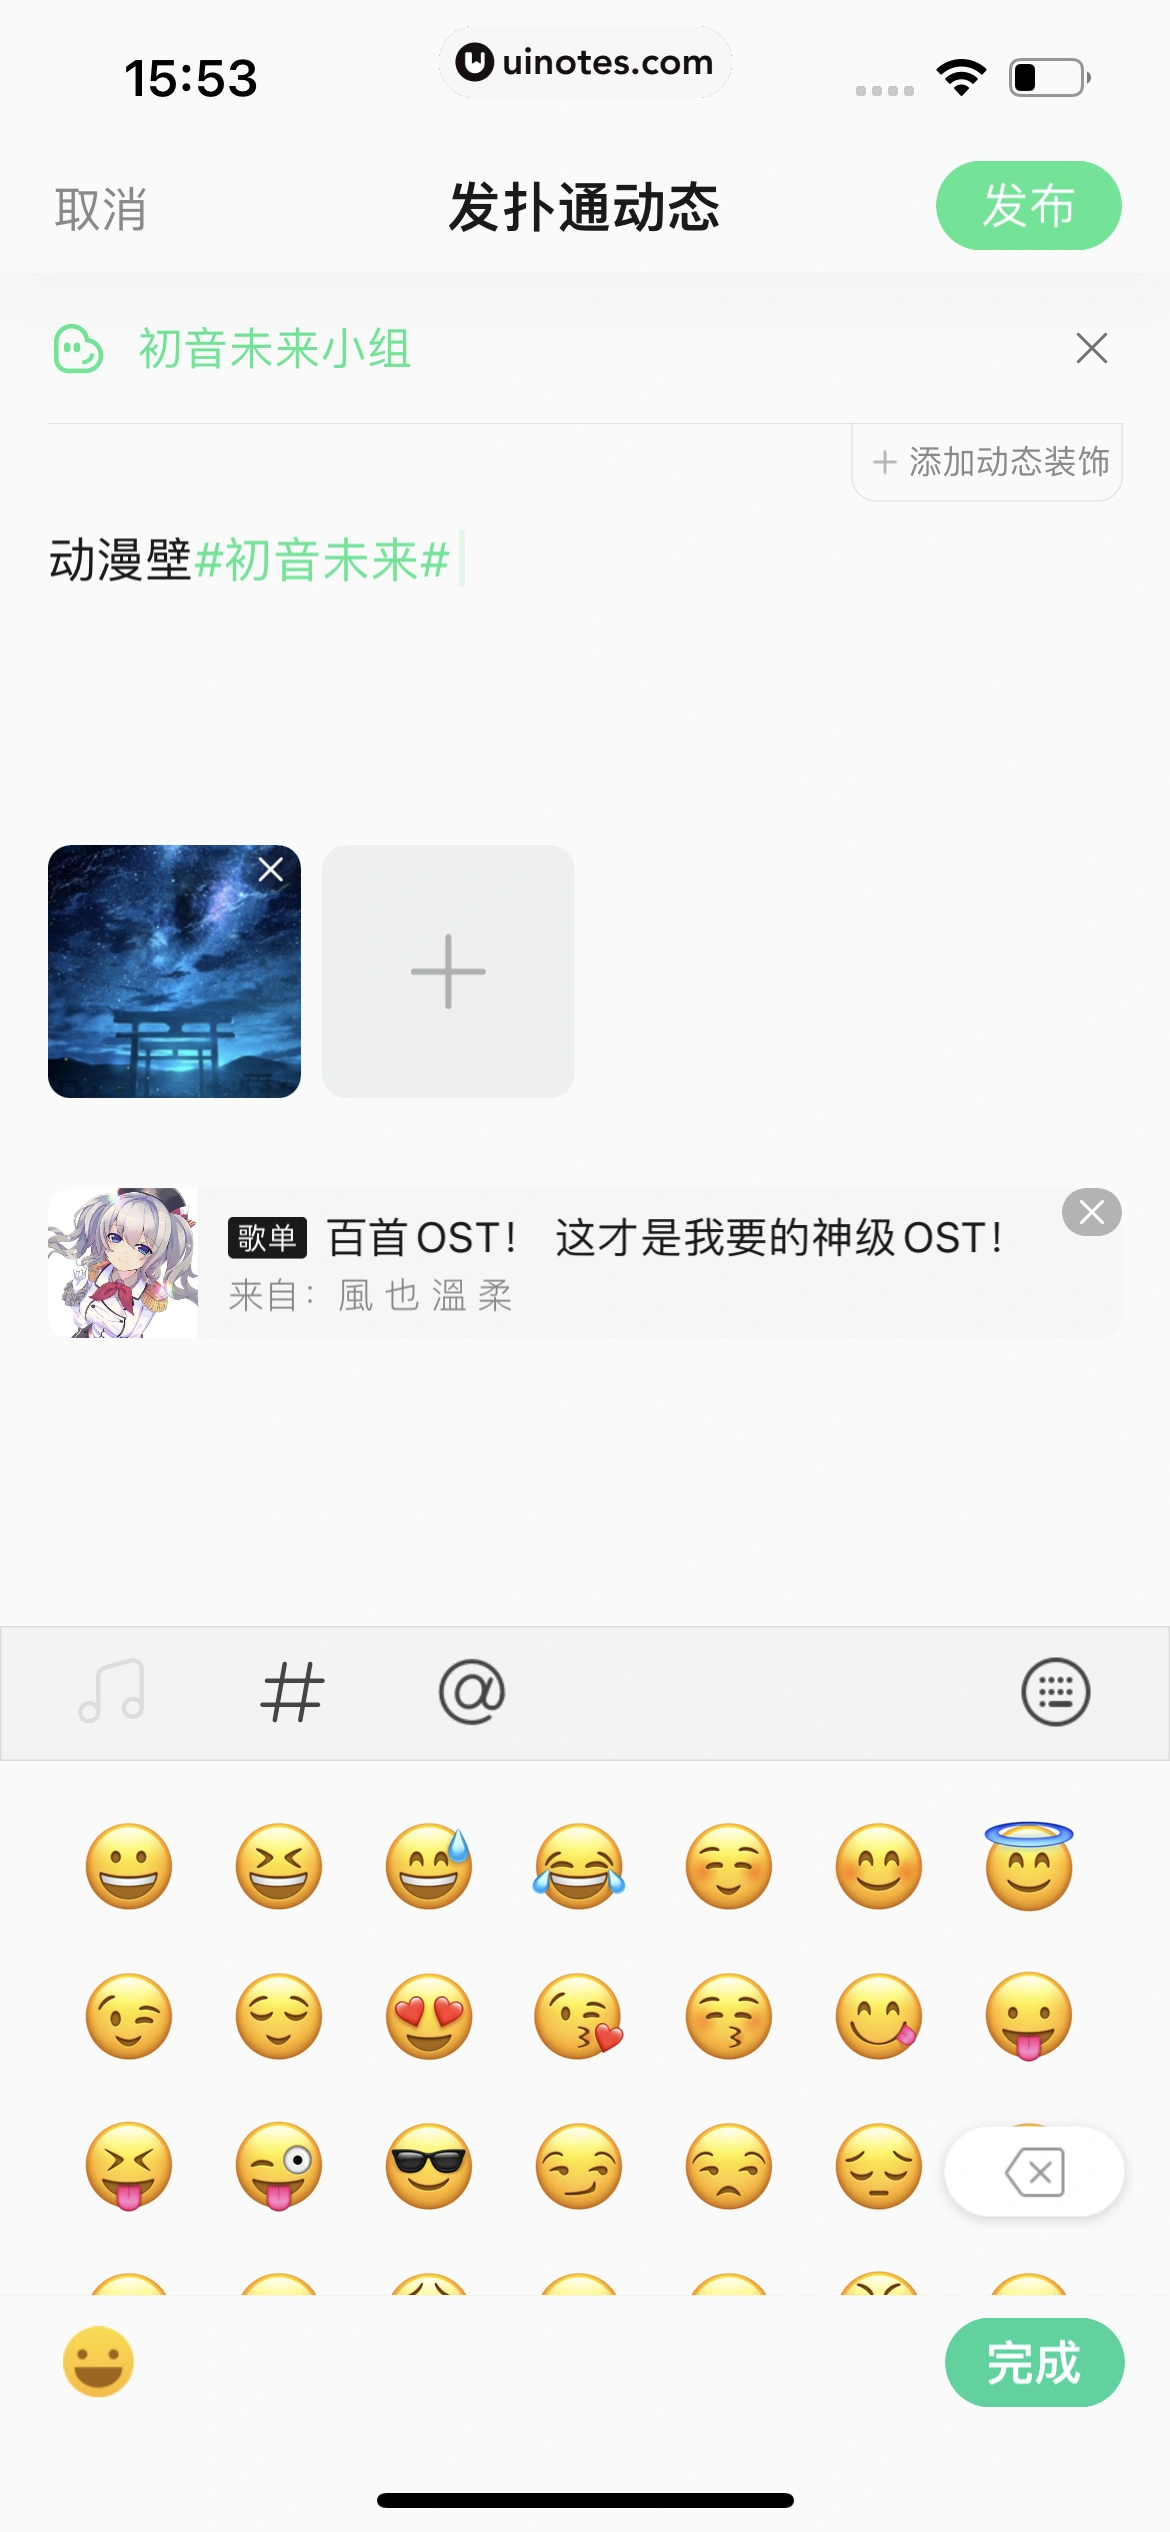 QQ音乐 App 截图 449 - UI Notes